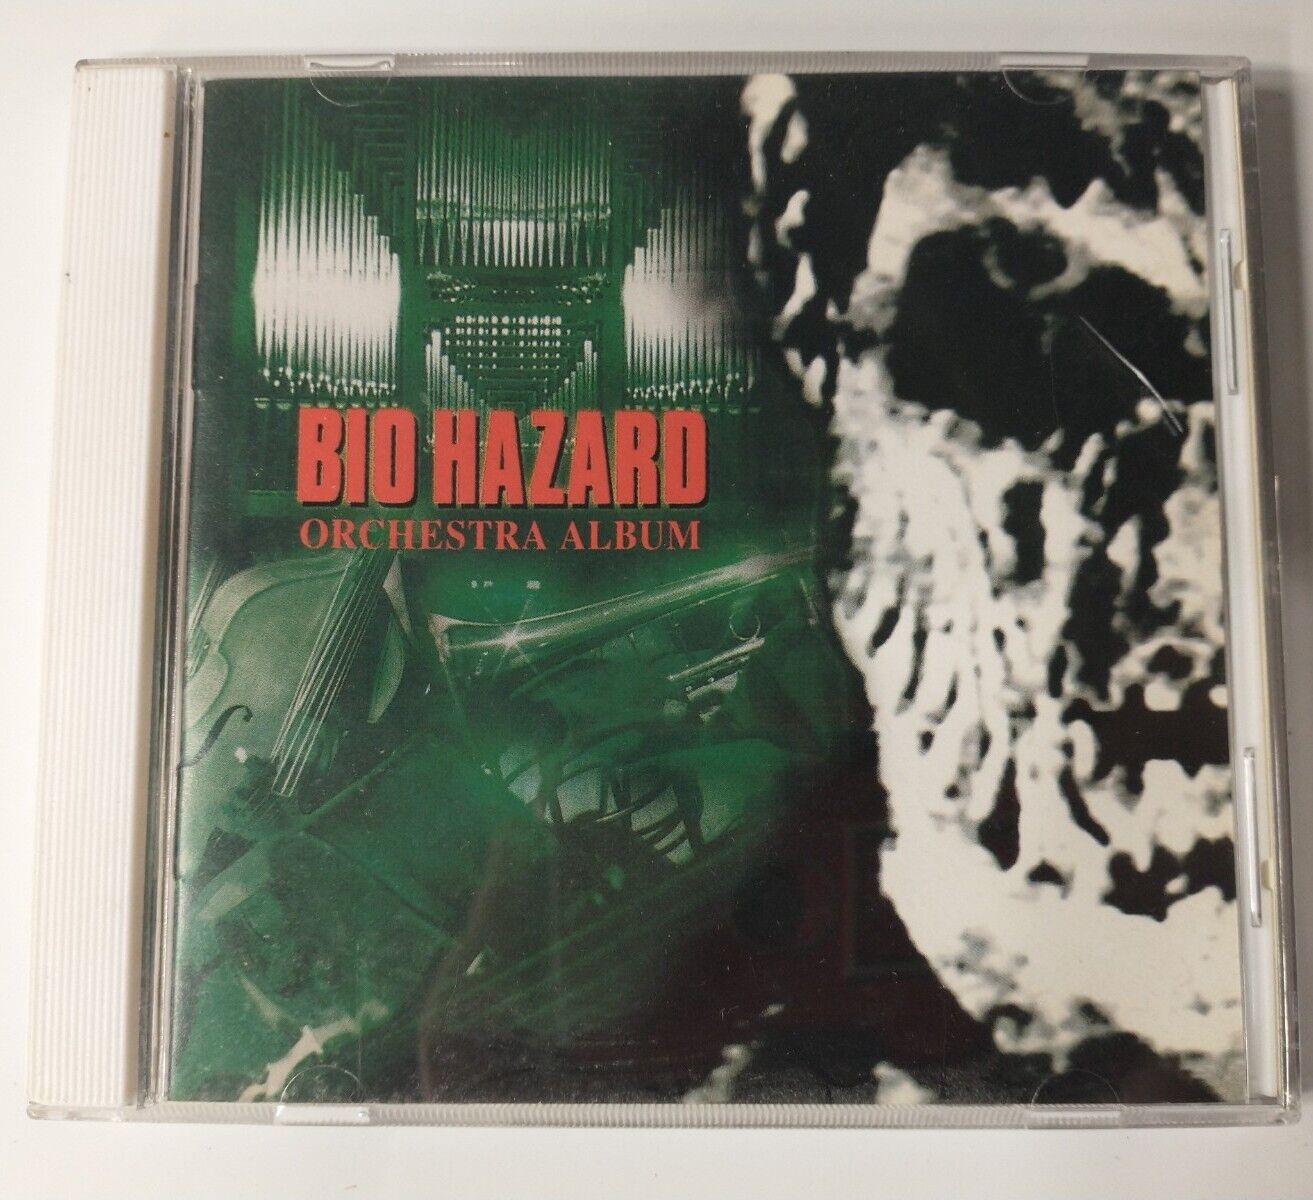 BIOHAZARD ORCHESTRA ALBUM CD (Resident Evil Album)